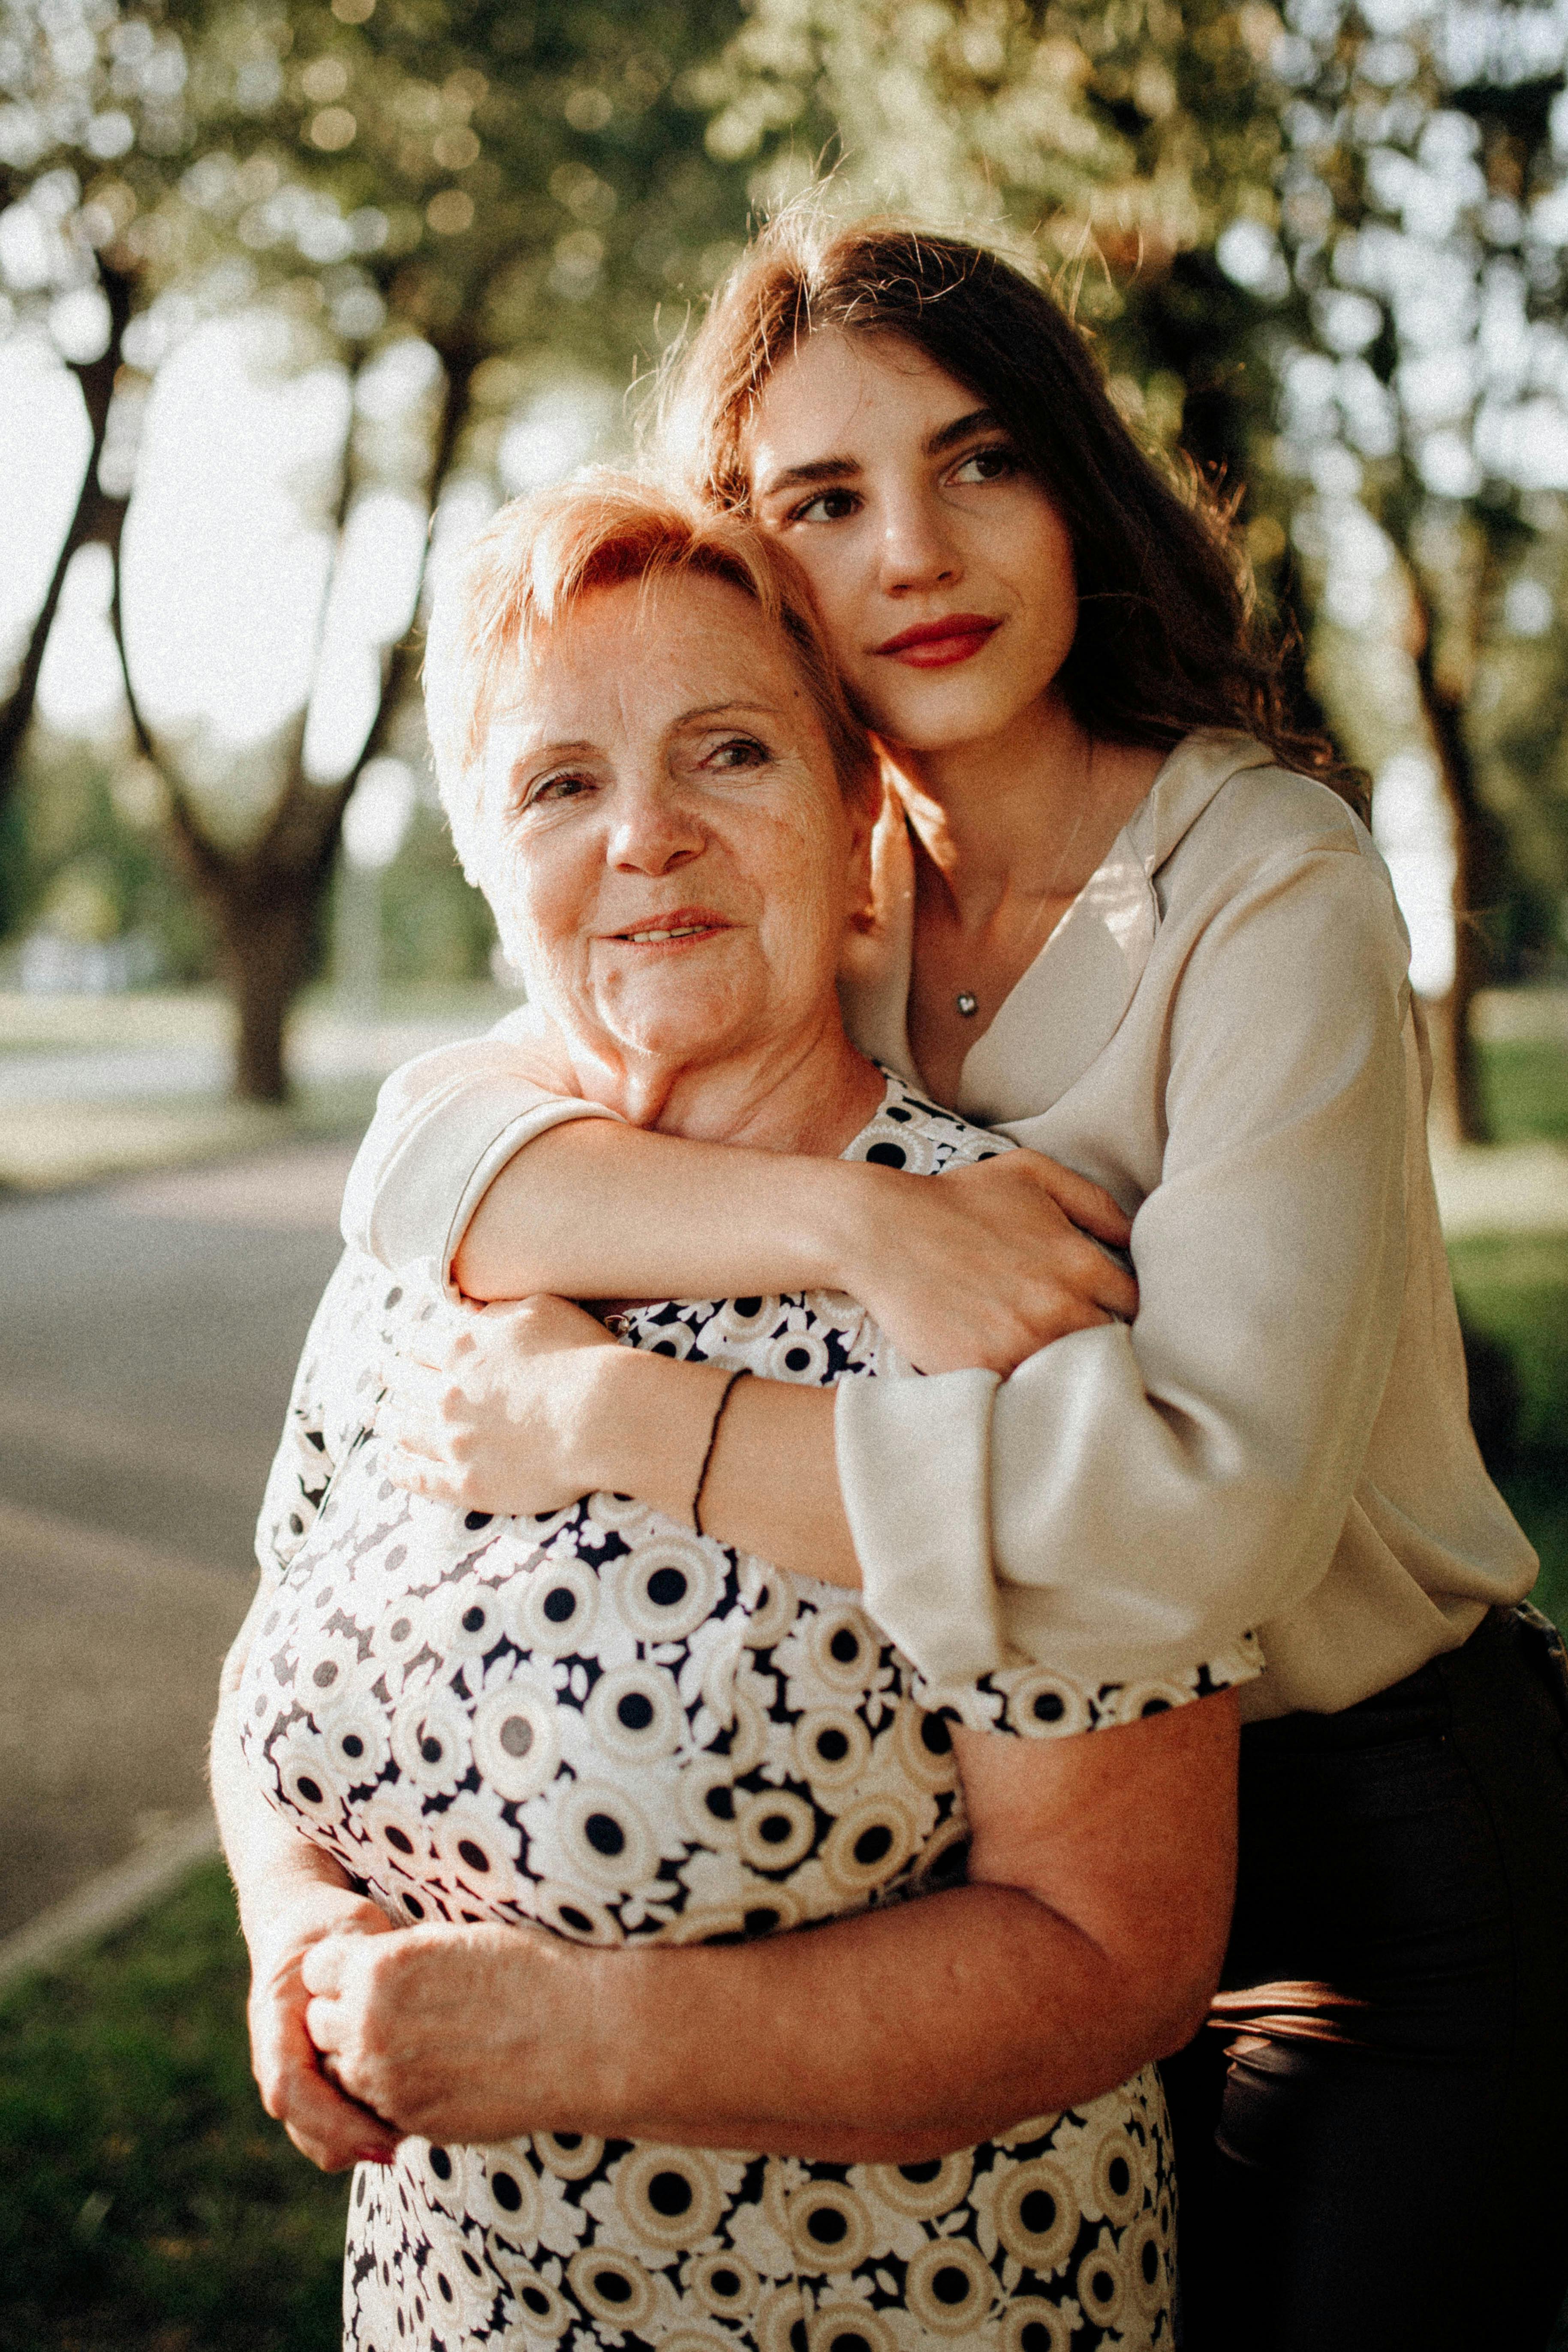 A woman hugging her grandmother | Source: Pexels